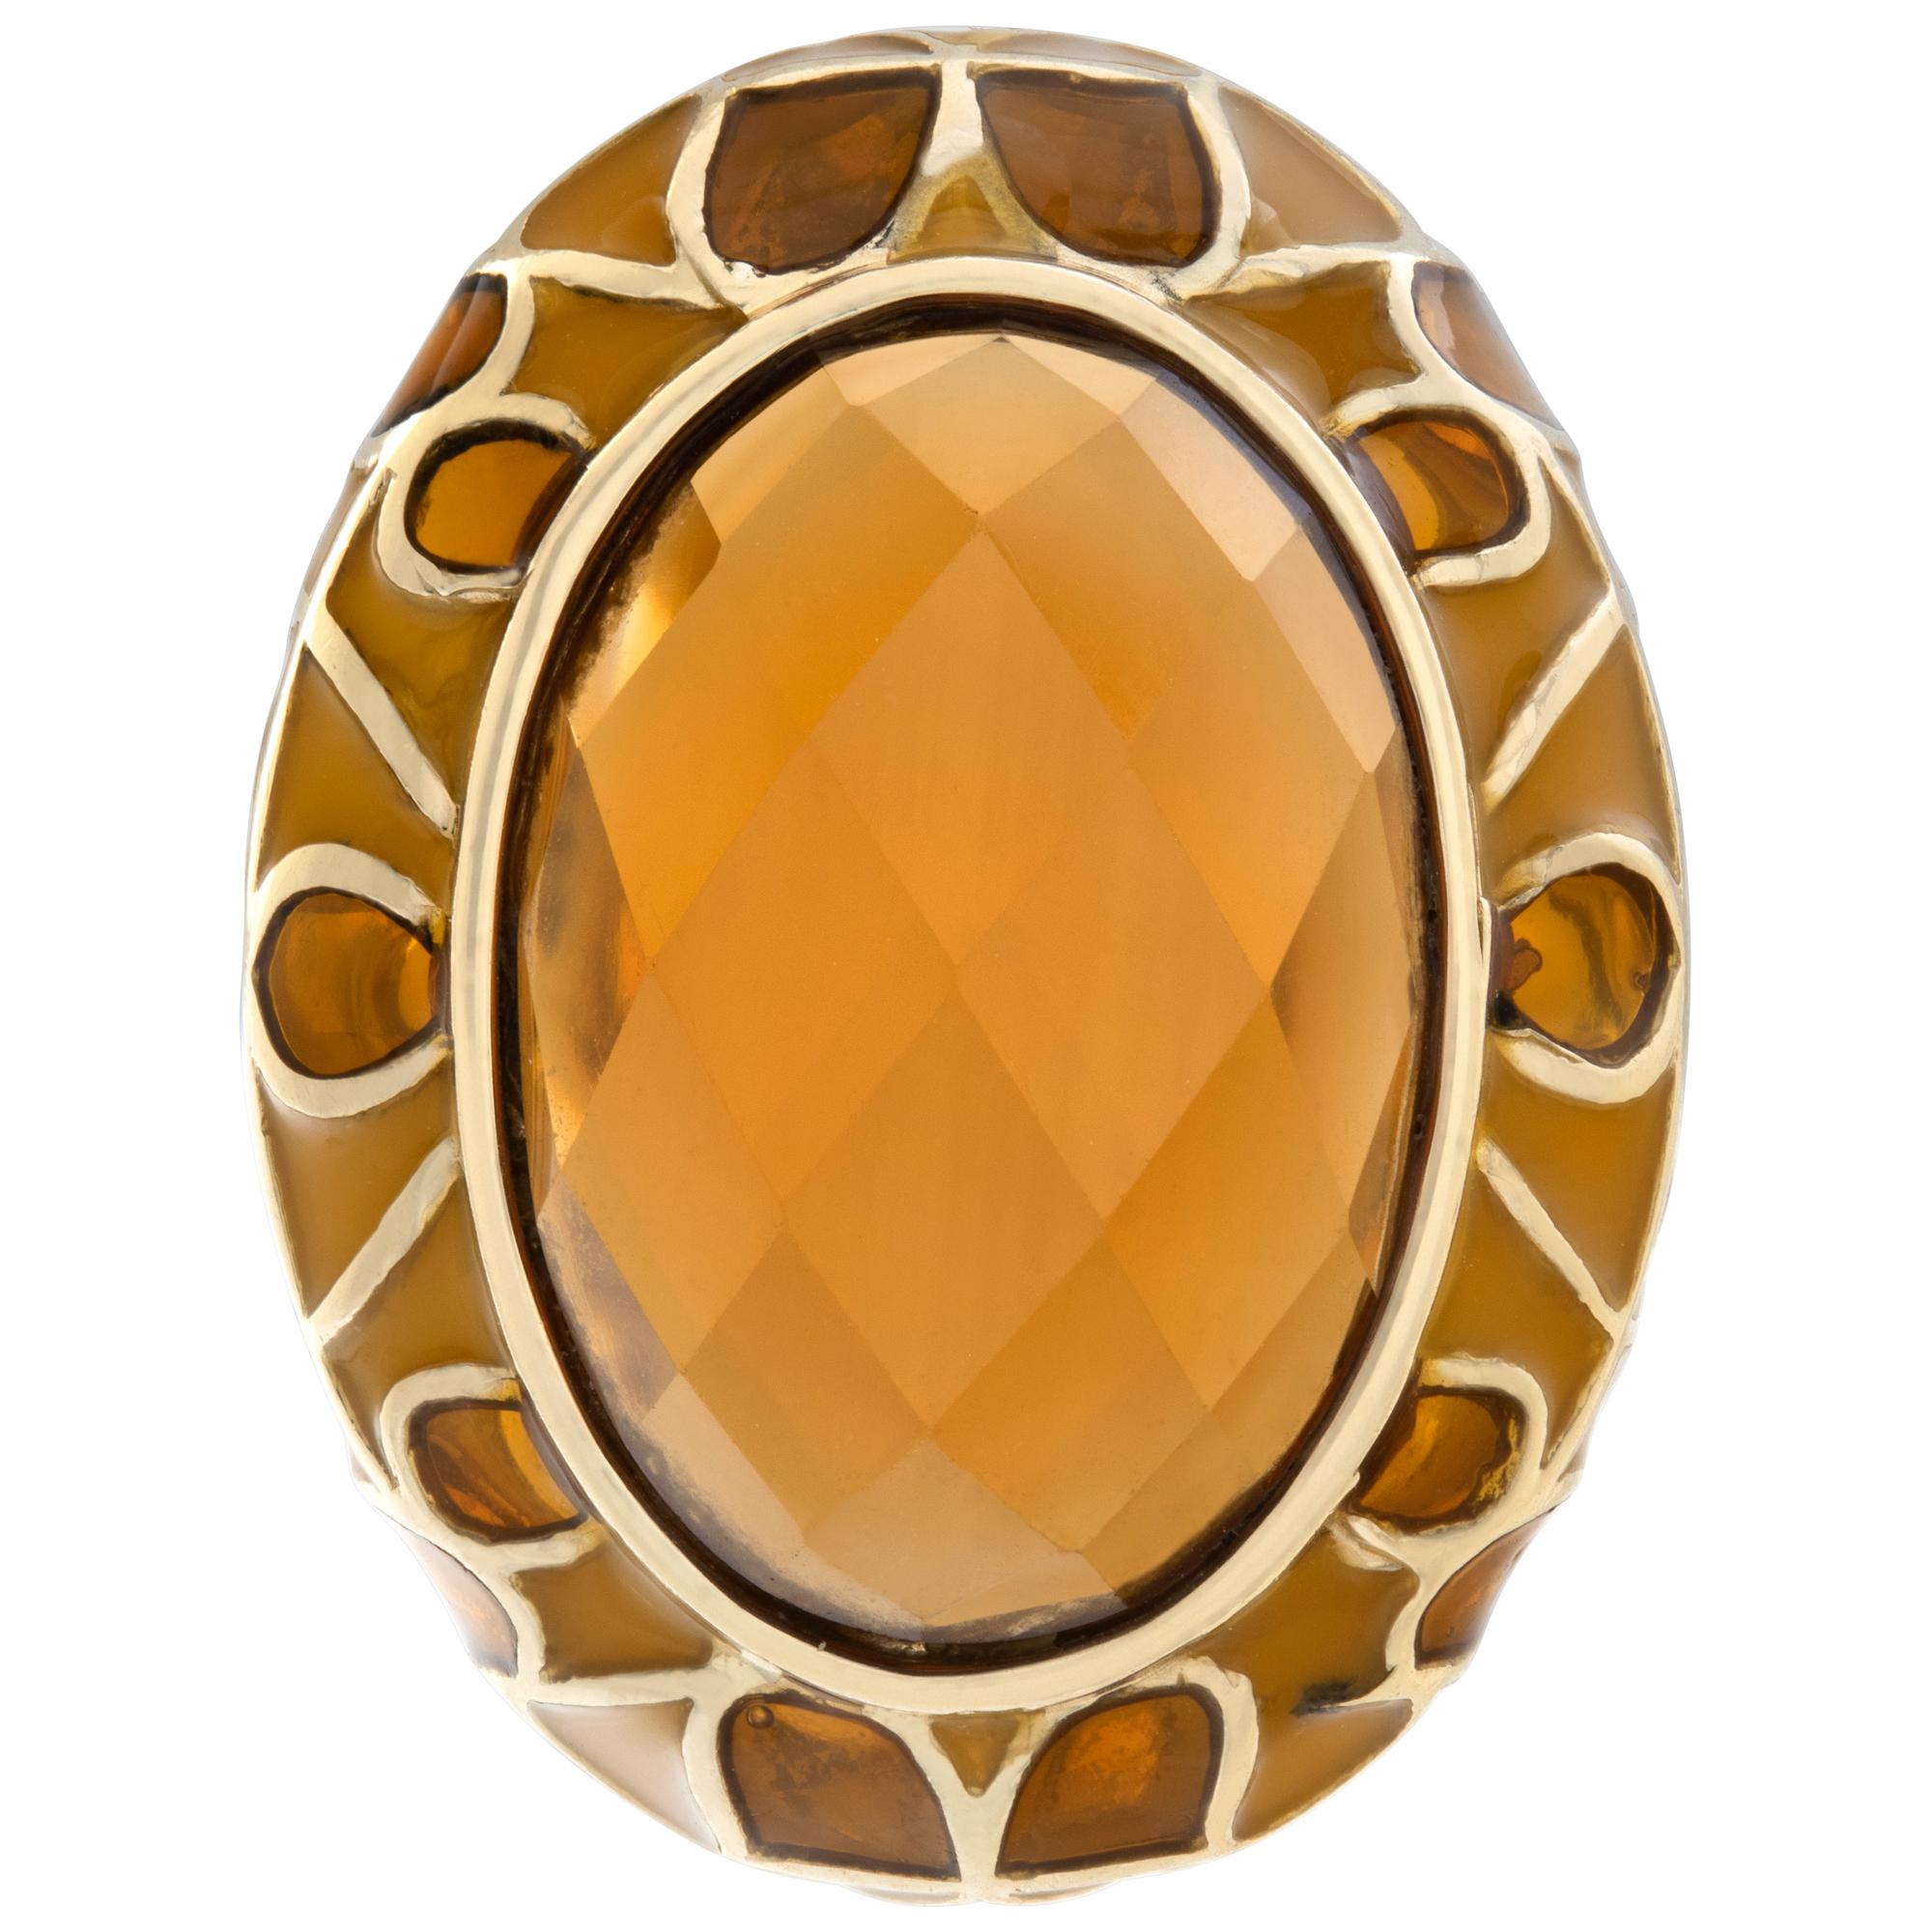 Brilliant diamond cut oval shape citrine (approx. 16.00 carats) set in 14K yellow gold. Beautiful 